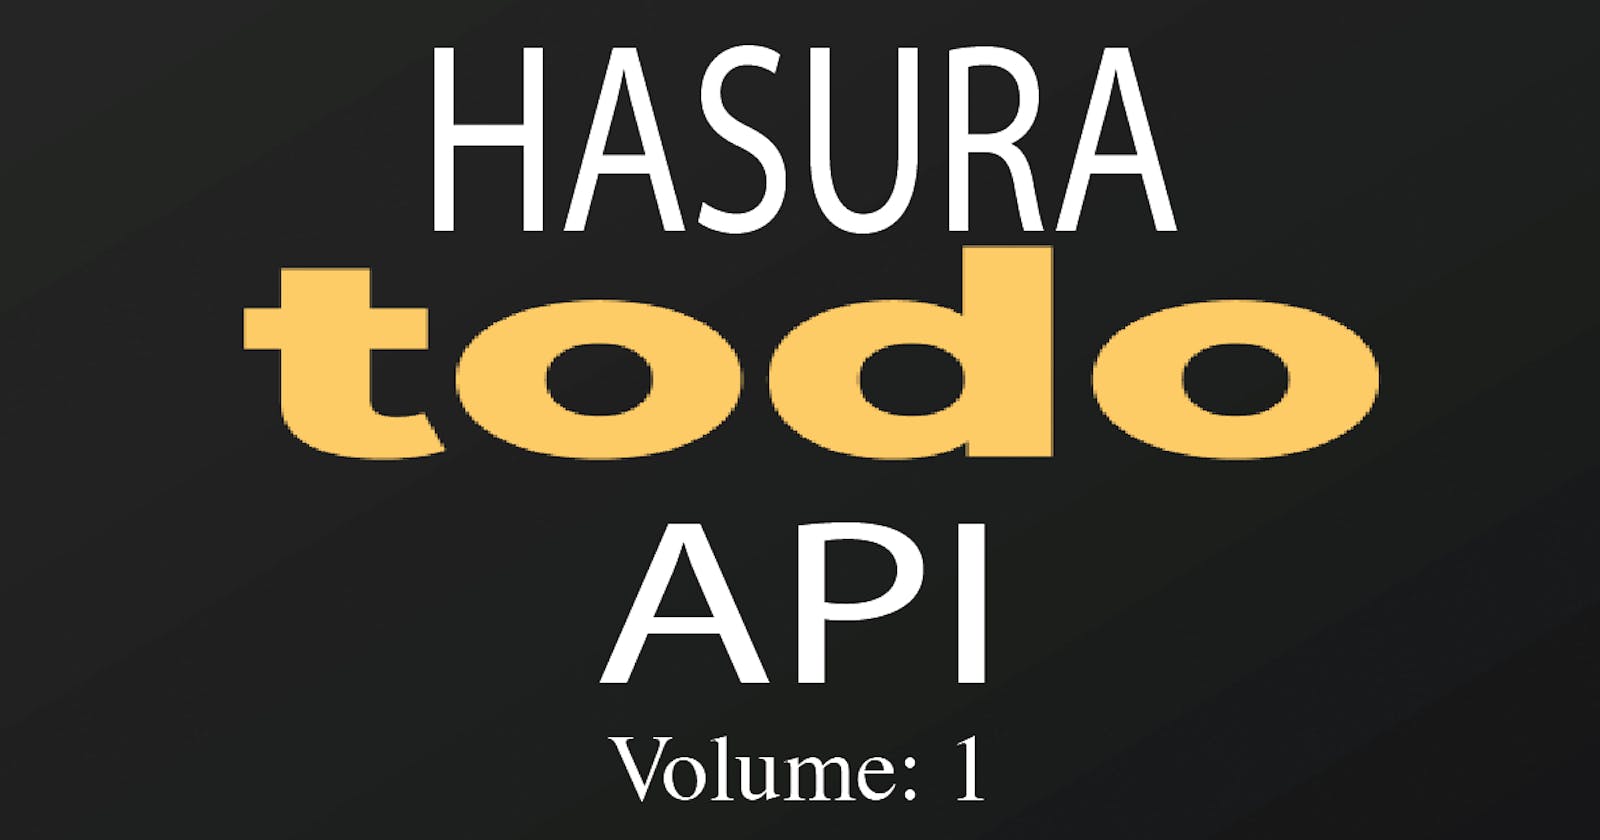 Volume 1: Hasura Todo API - Project started!!!